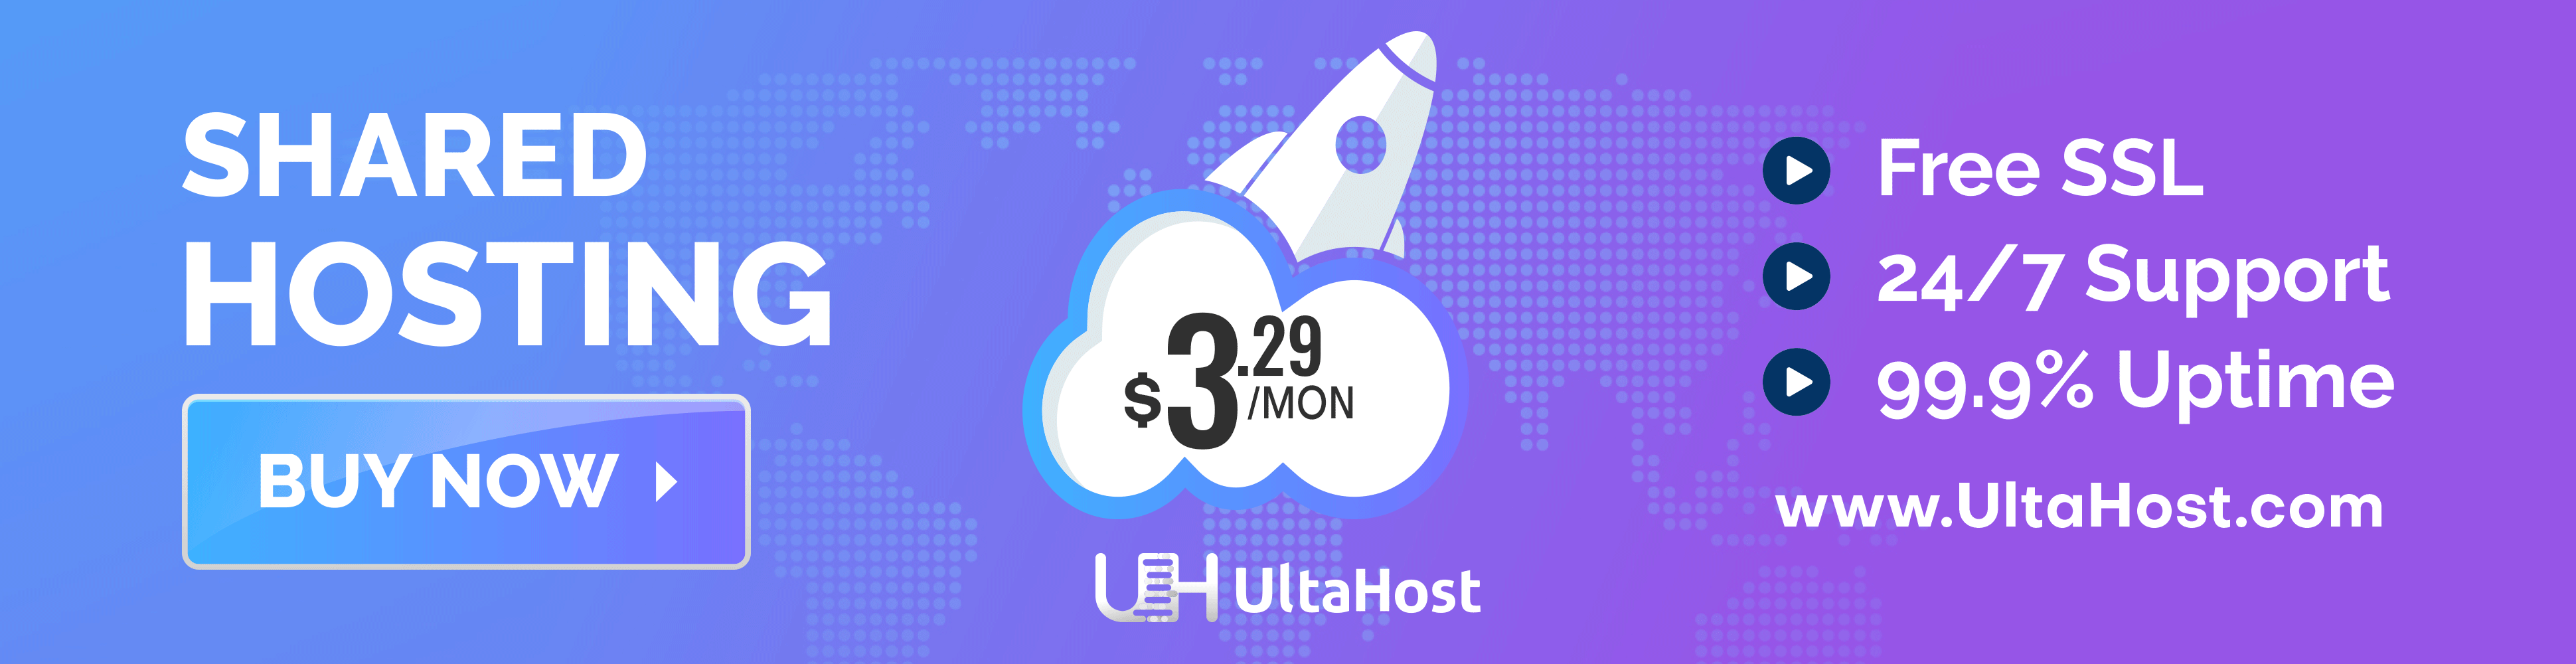 ultahost_cheap_shared_hosting_970x250